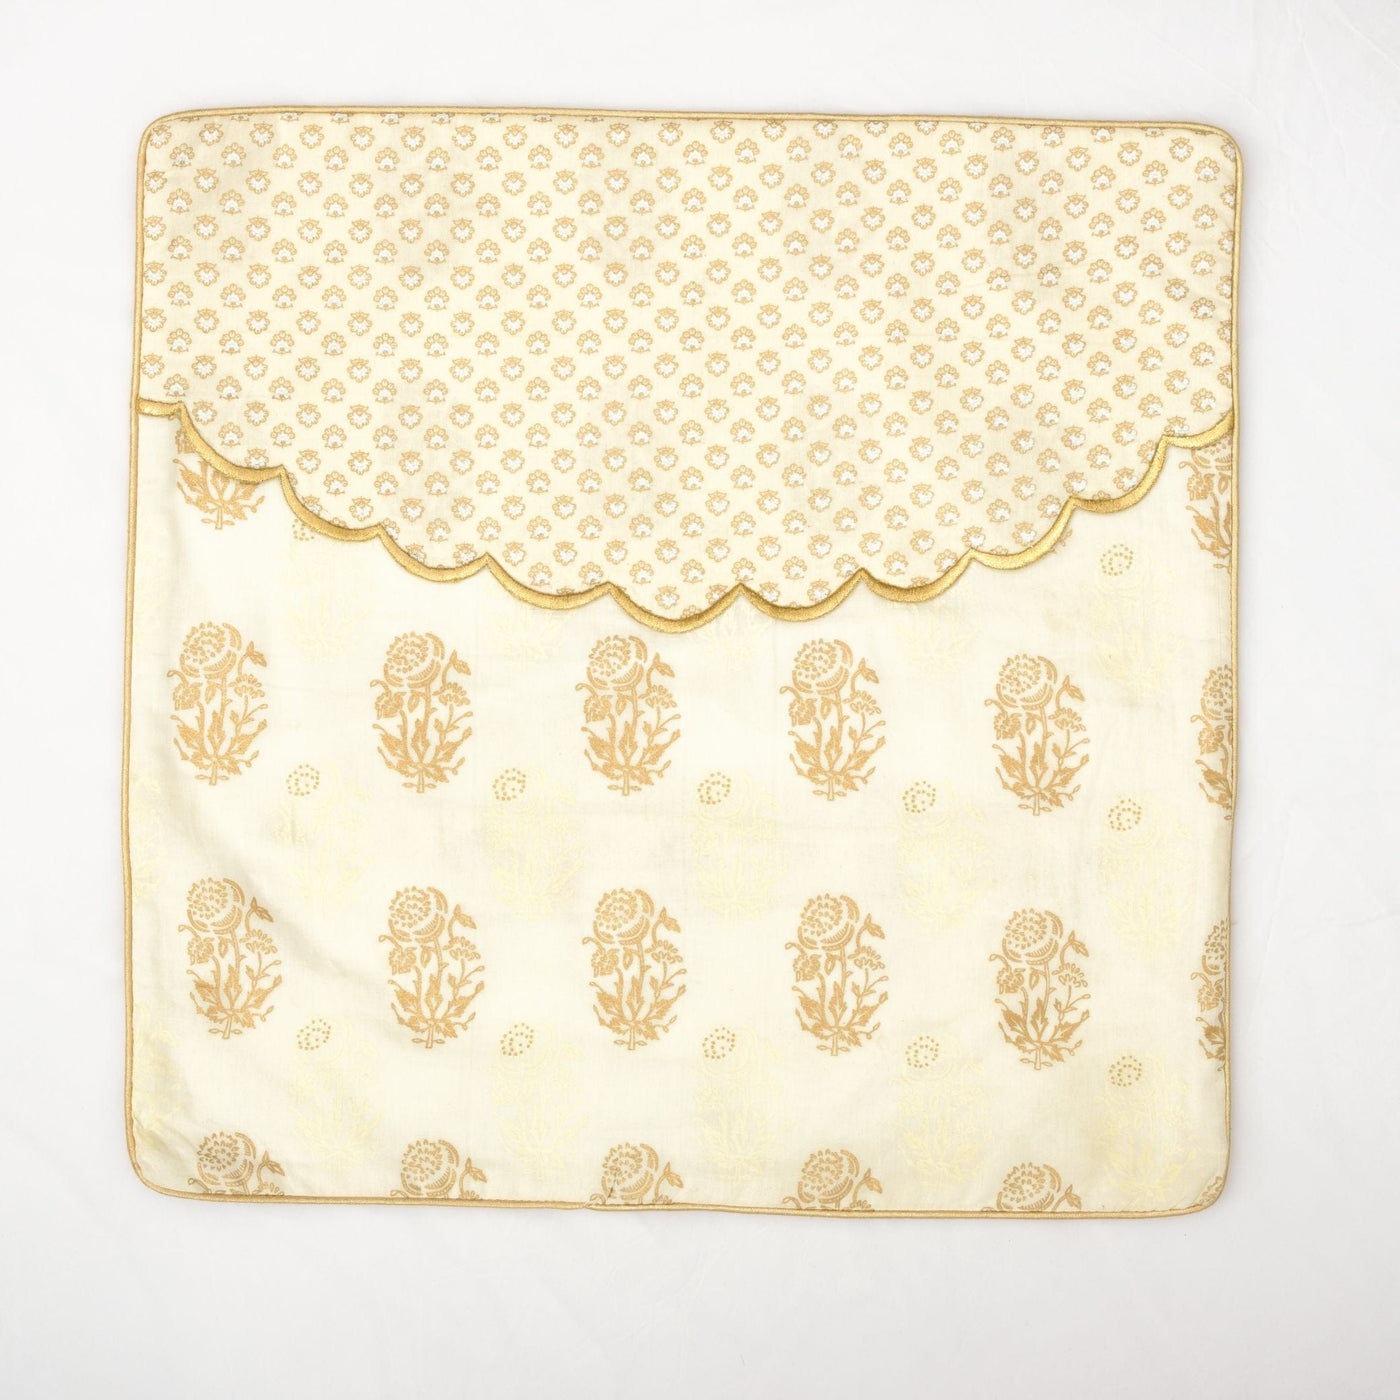 The Fabricrush  Pillowcases & Shams Scallop Embroidery Cushion Cover